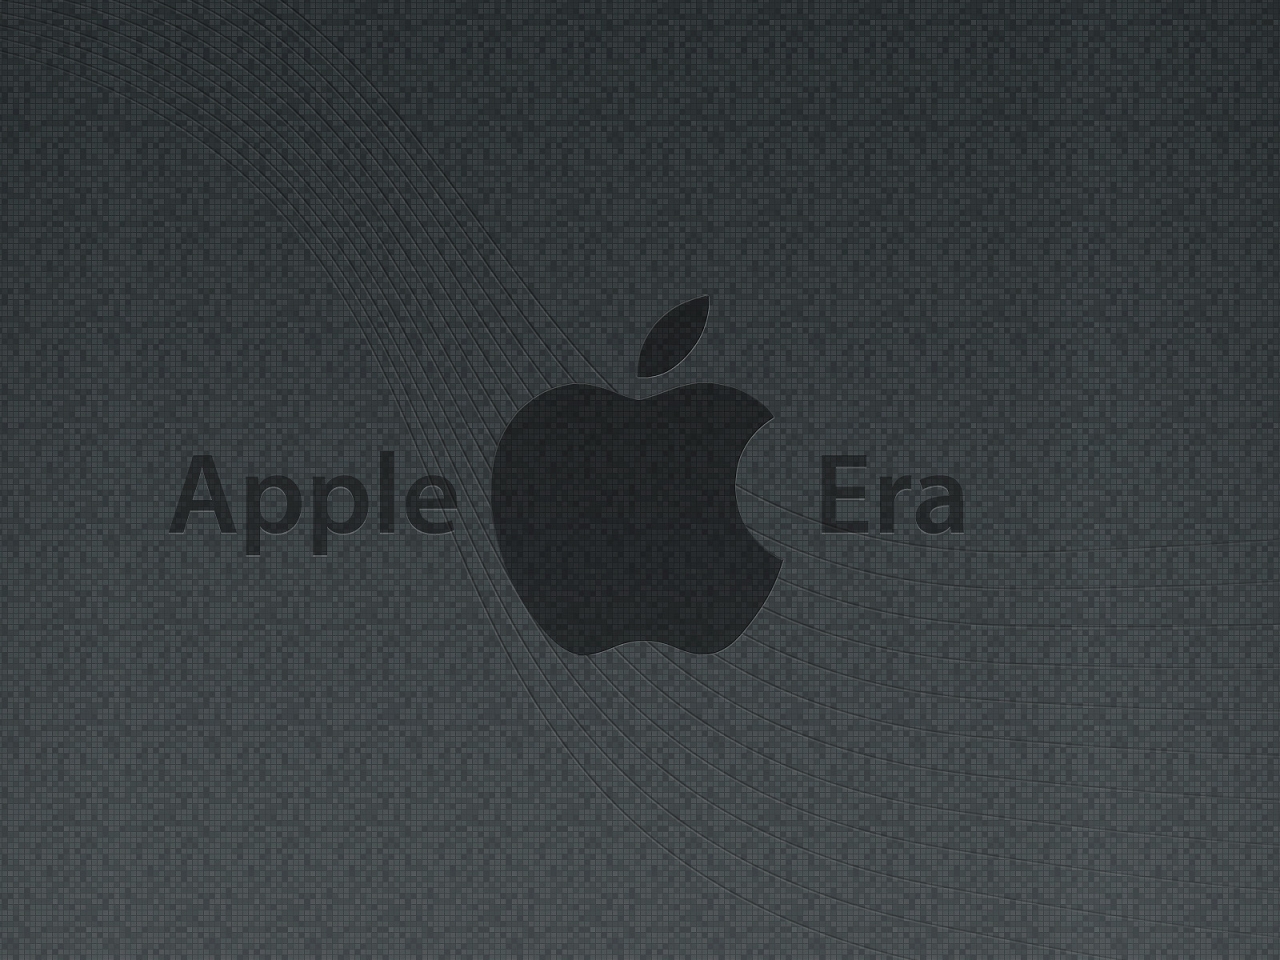 Apple Era for 1280 x 960 resolution